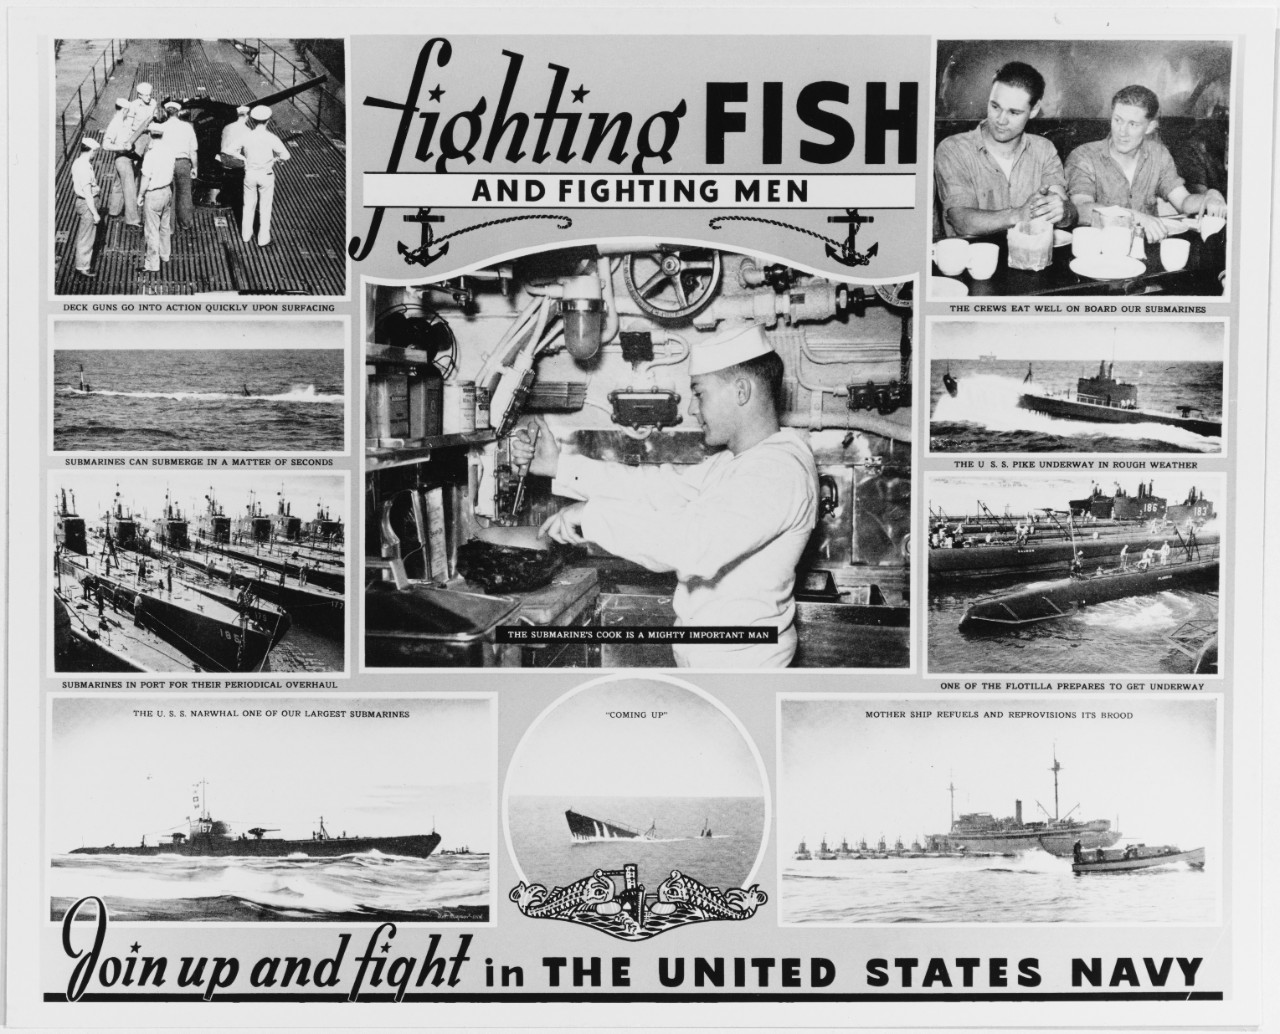 Navy recruiting poster, 1941, "Fighting Fish"